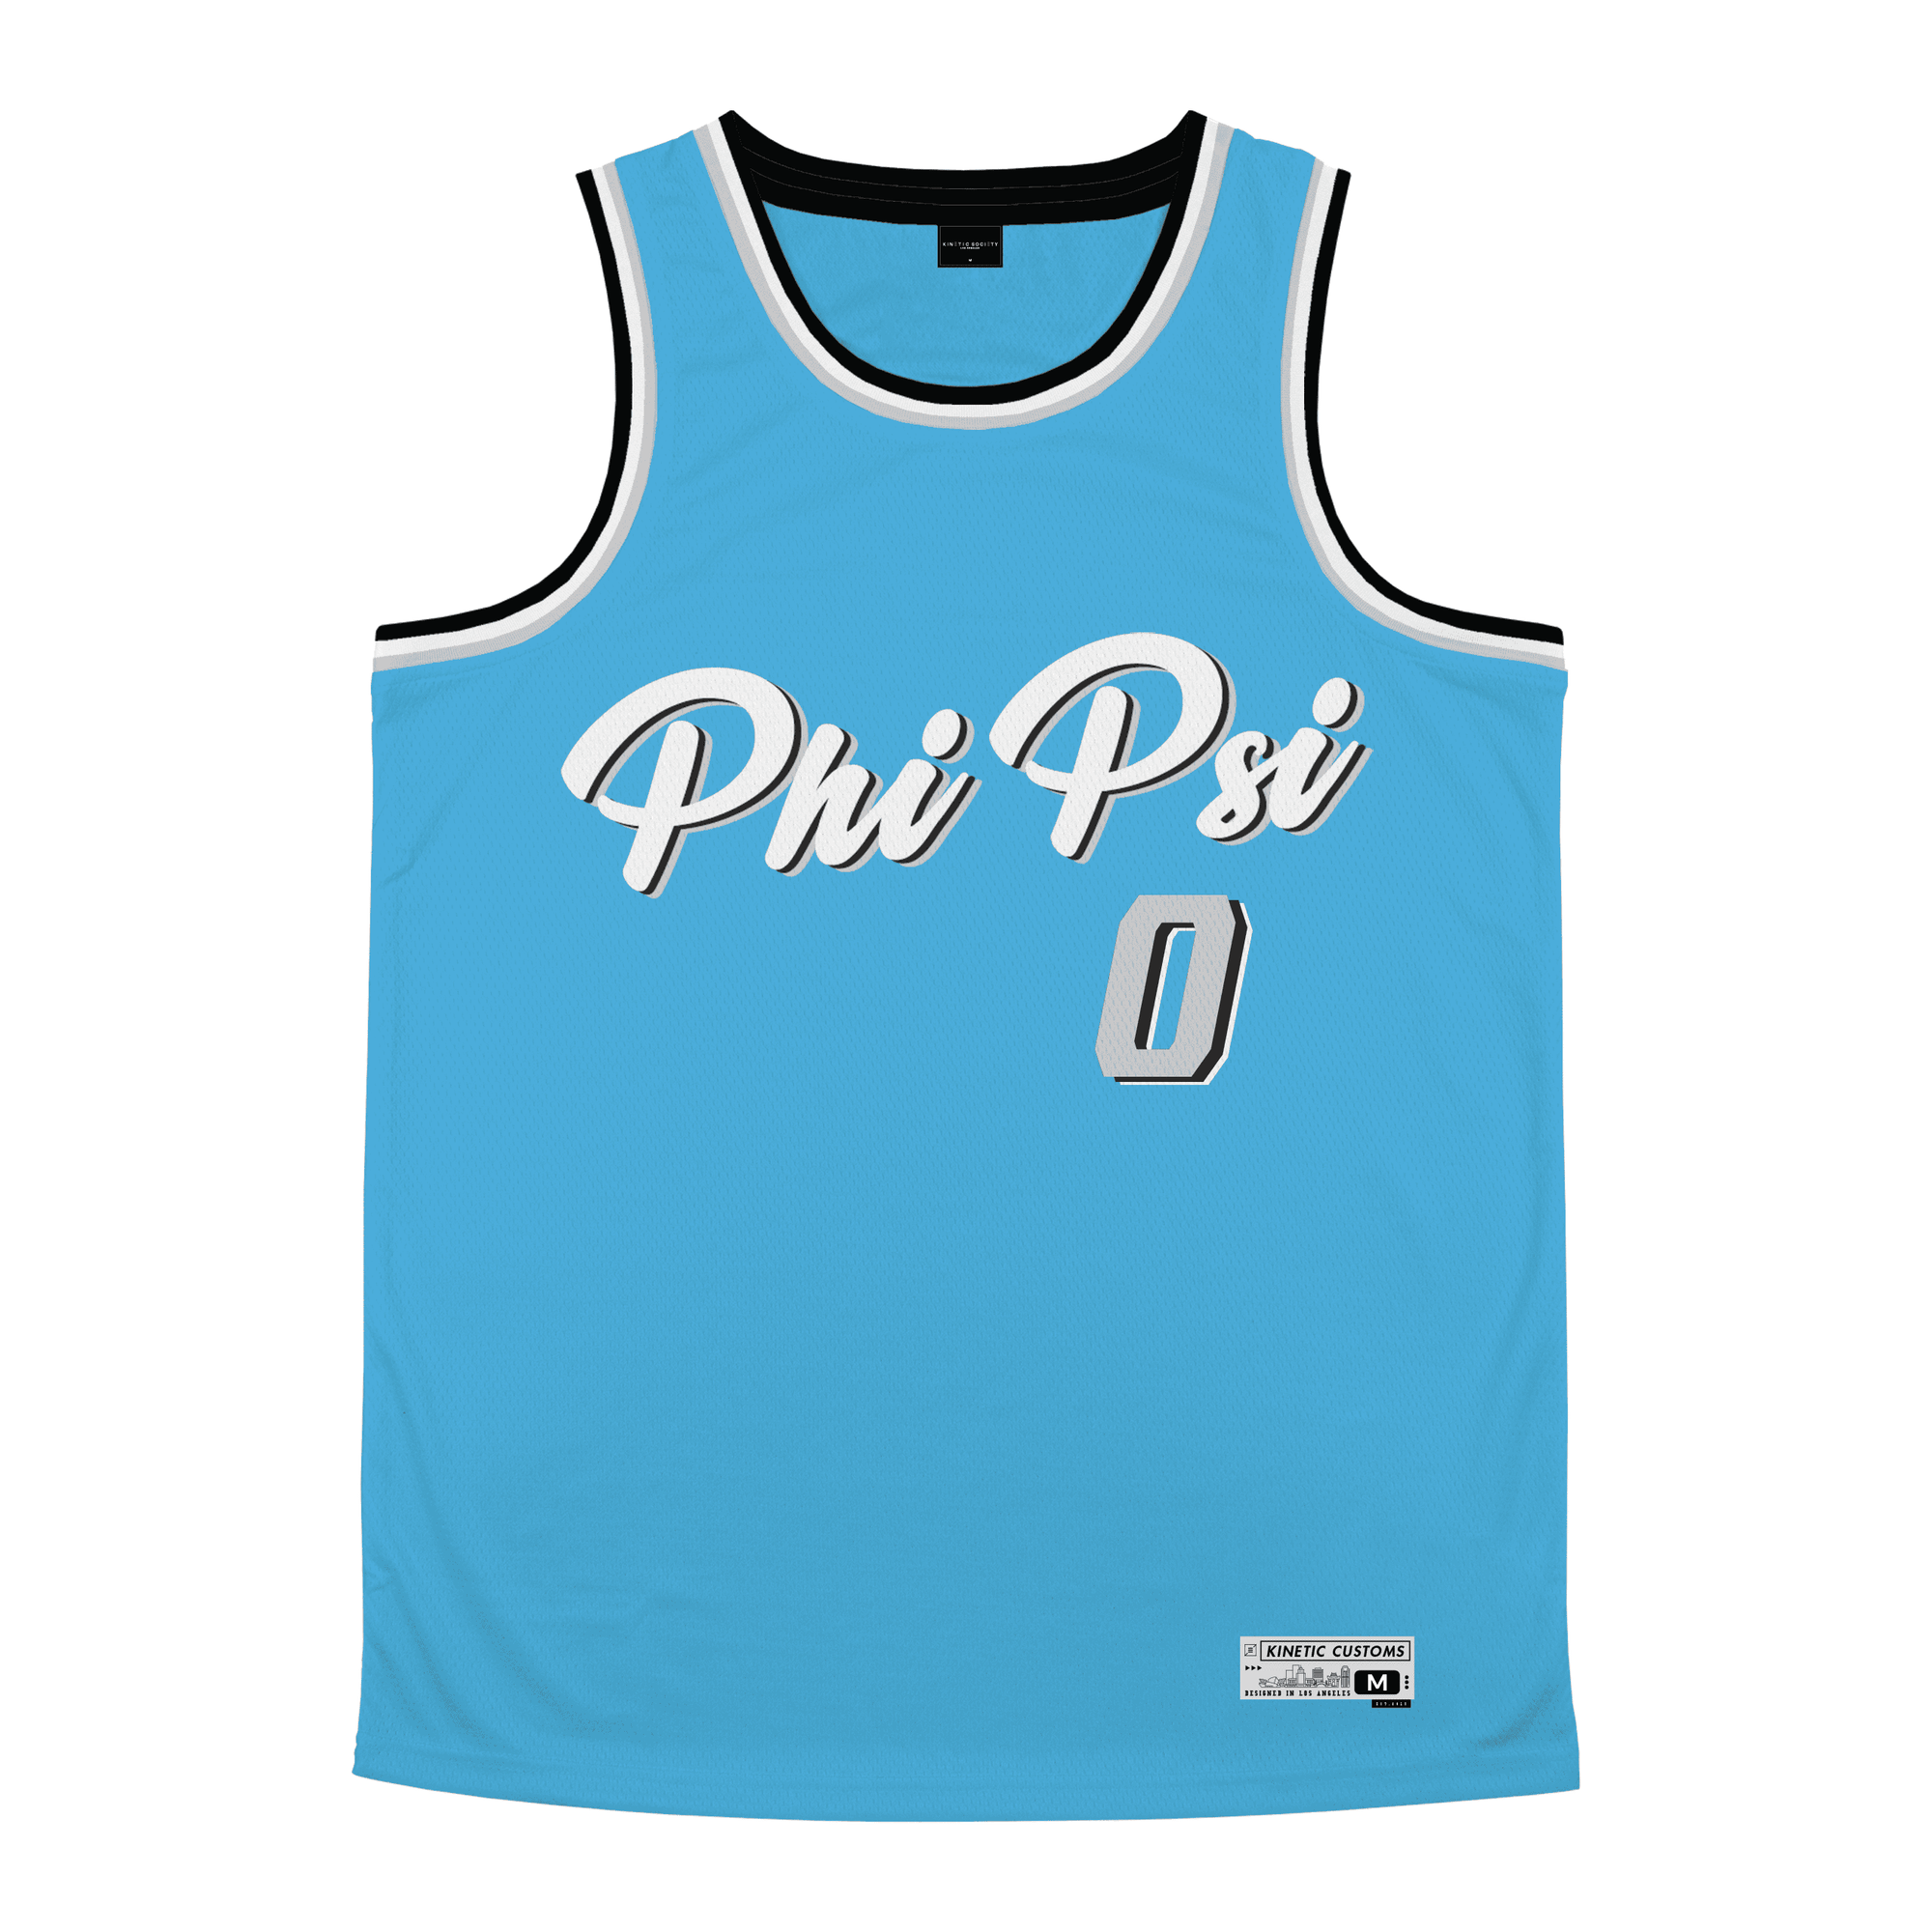 Phi Kappa Psi - Pacific Mist Basketball Jersey